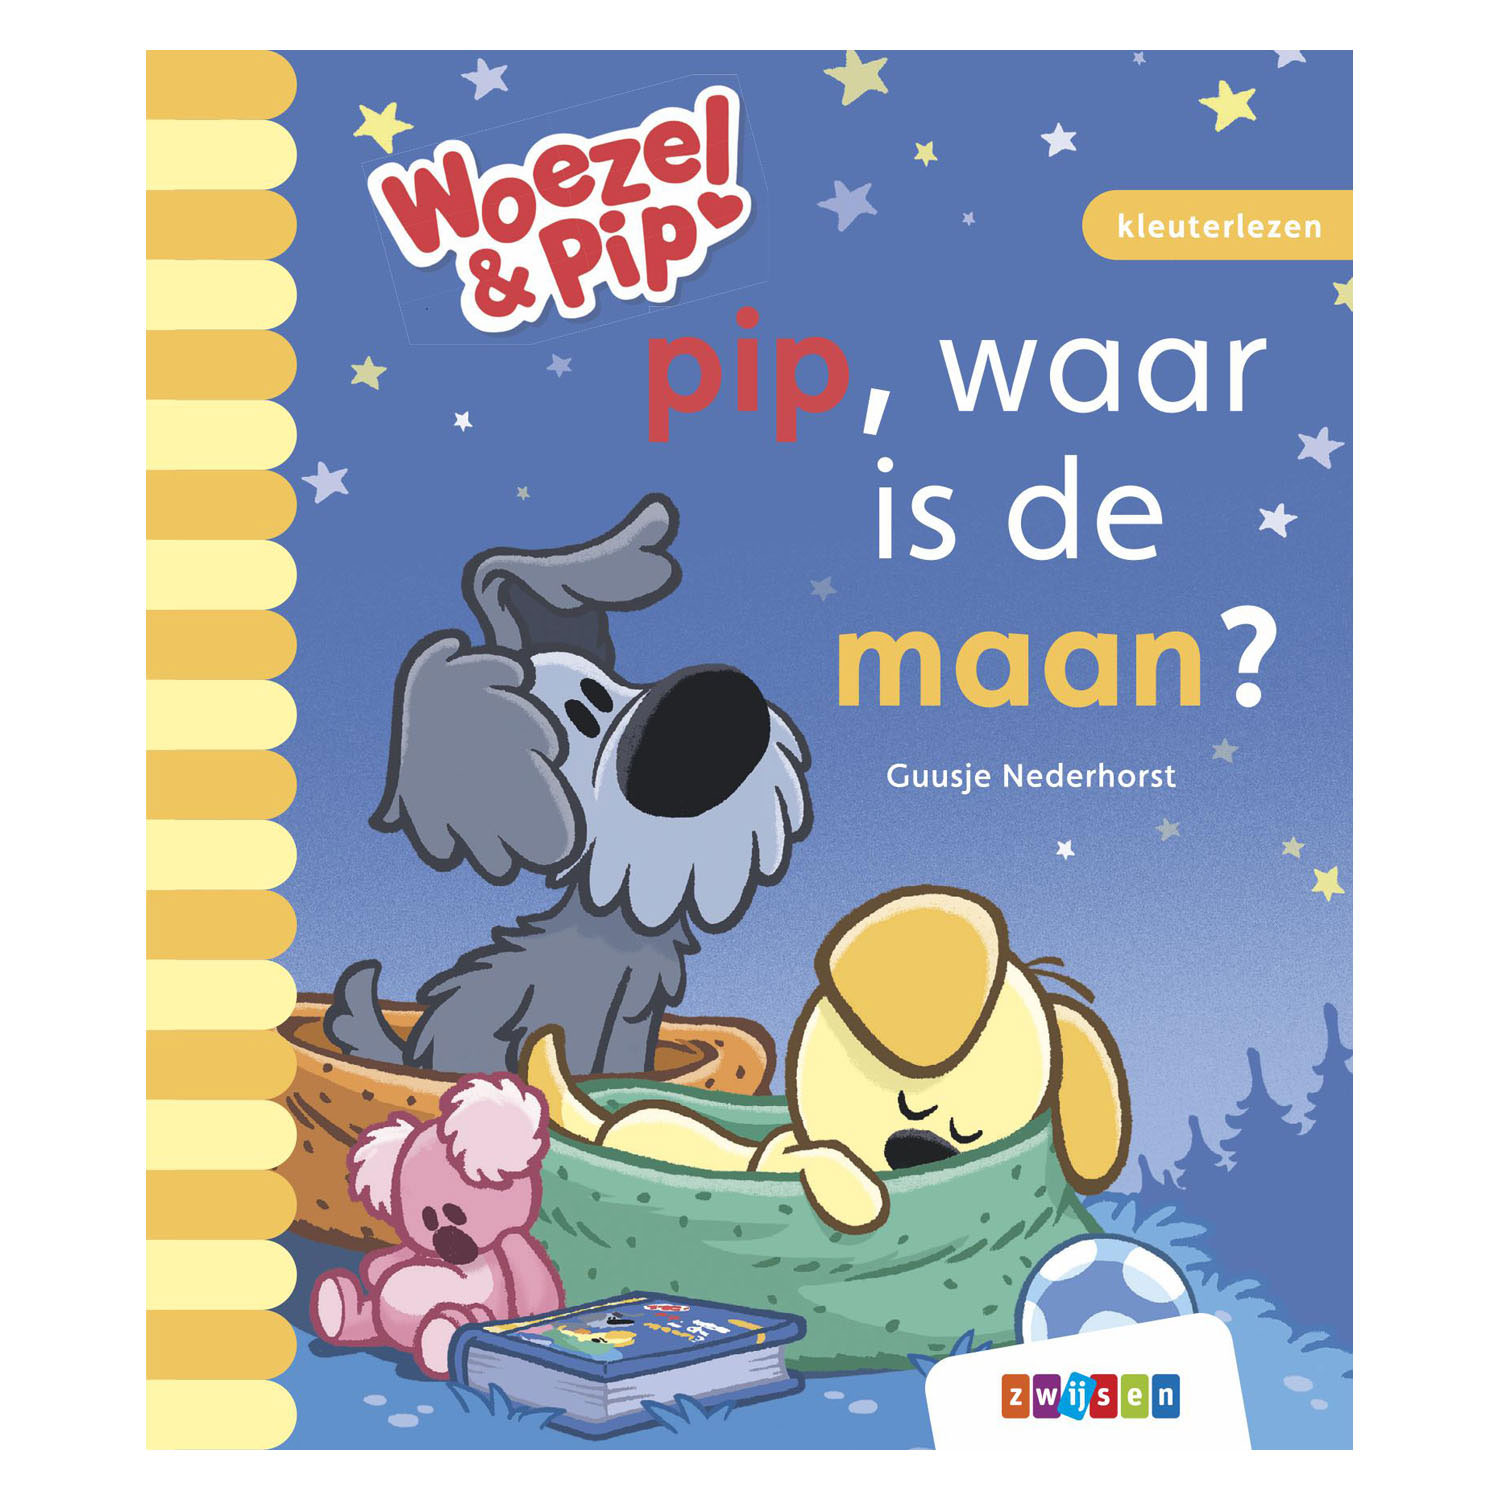 Kindergarten reading - Woezel & - pip, where is moon? | Thimble Toys